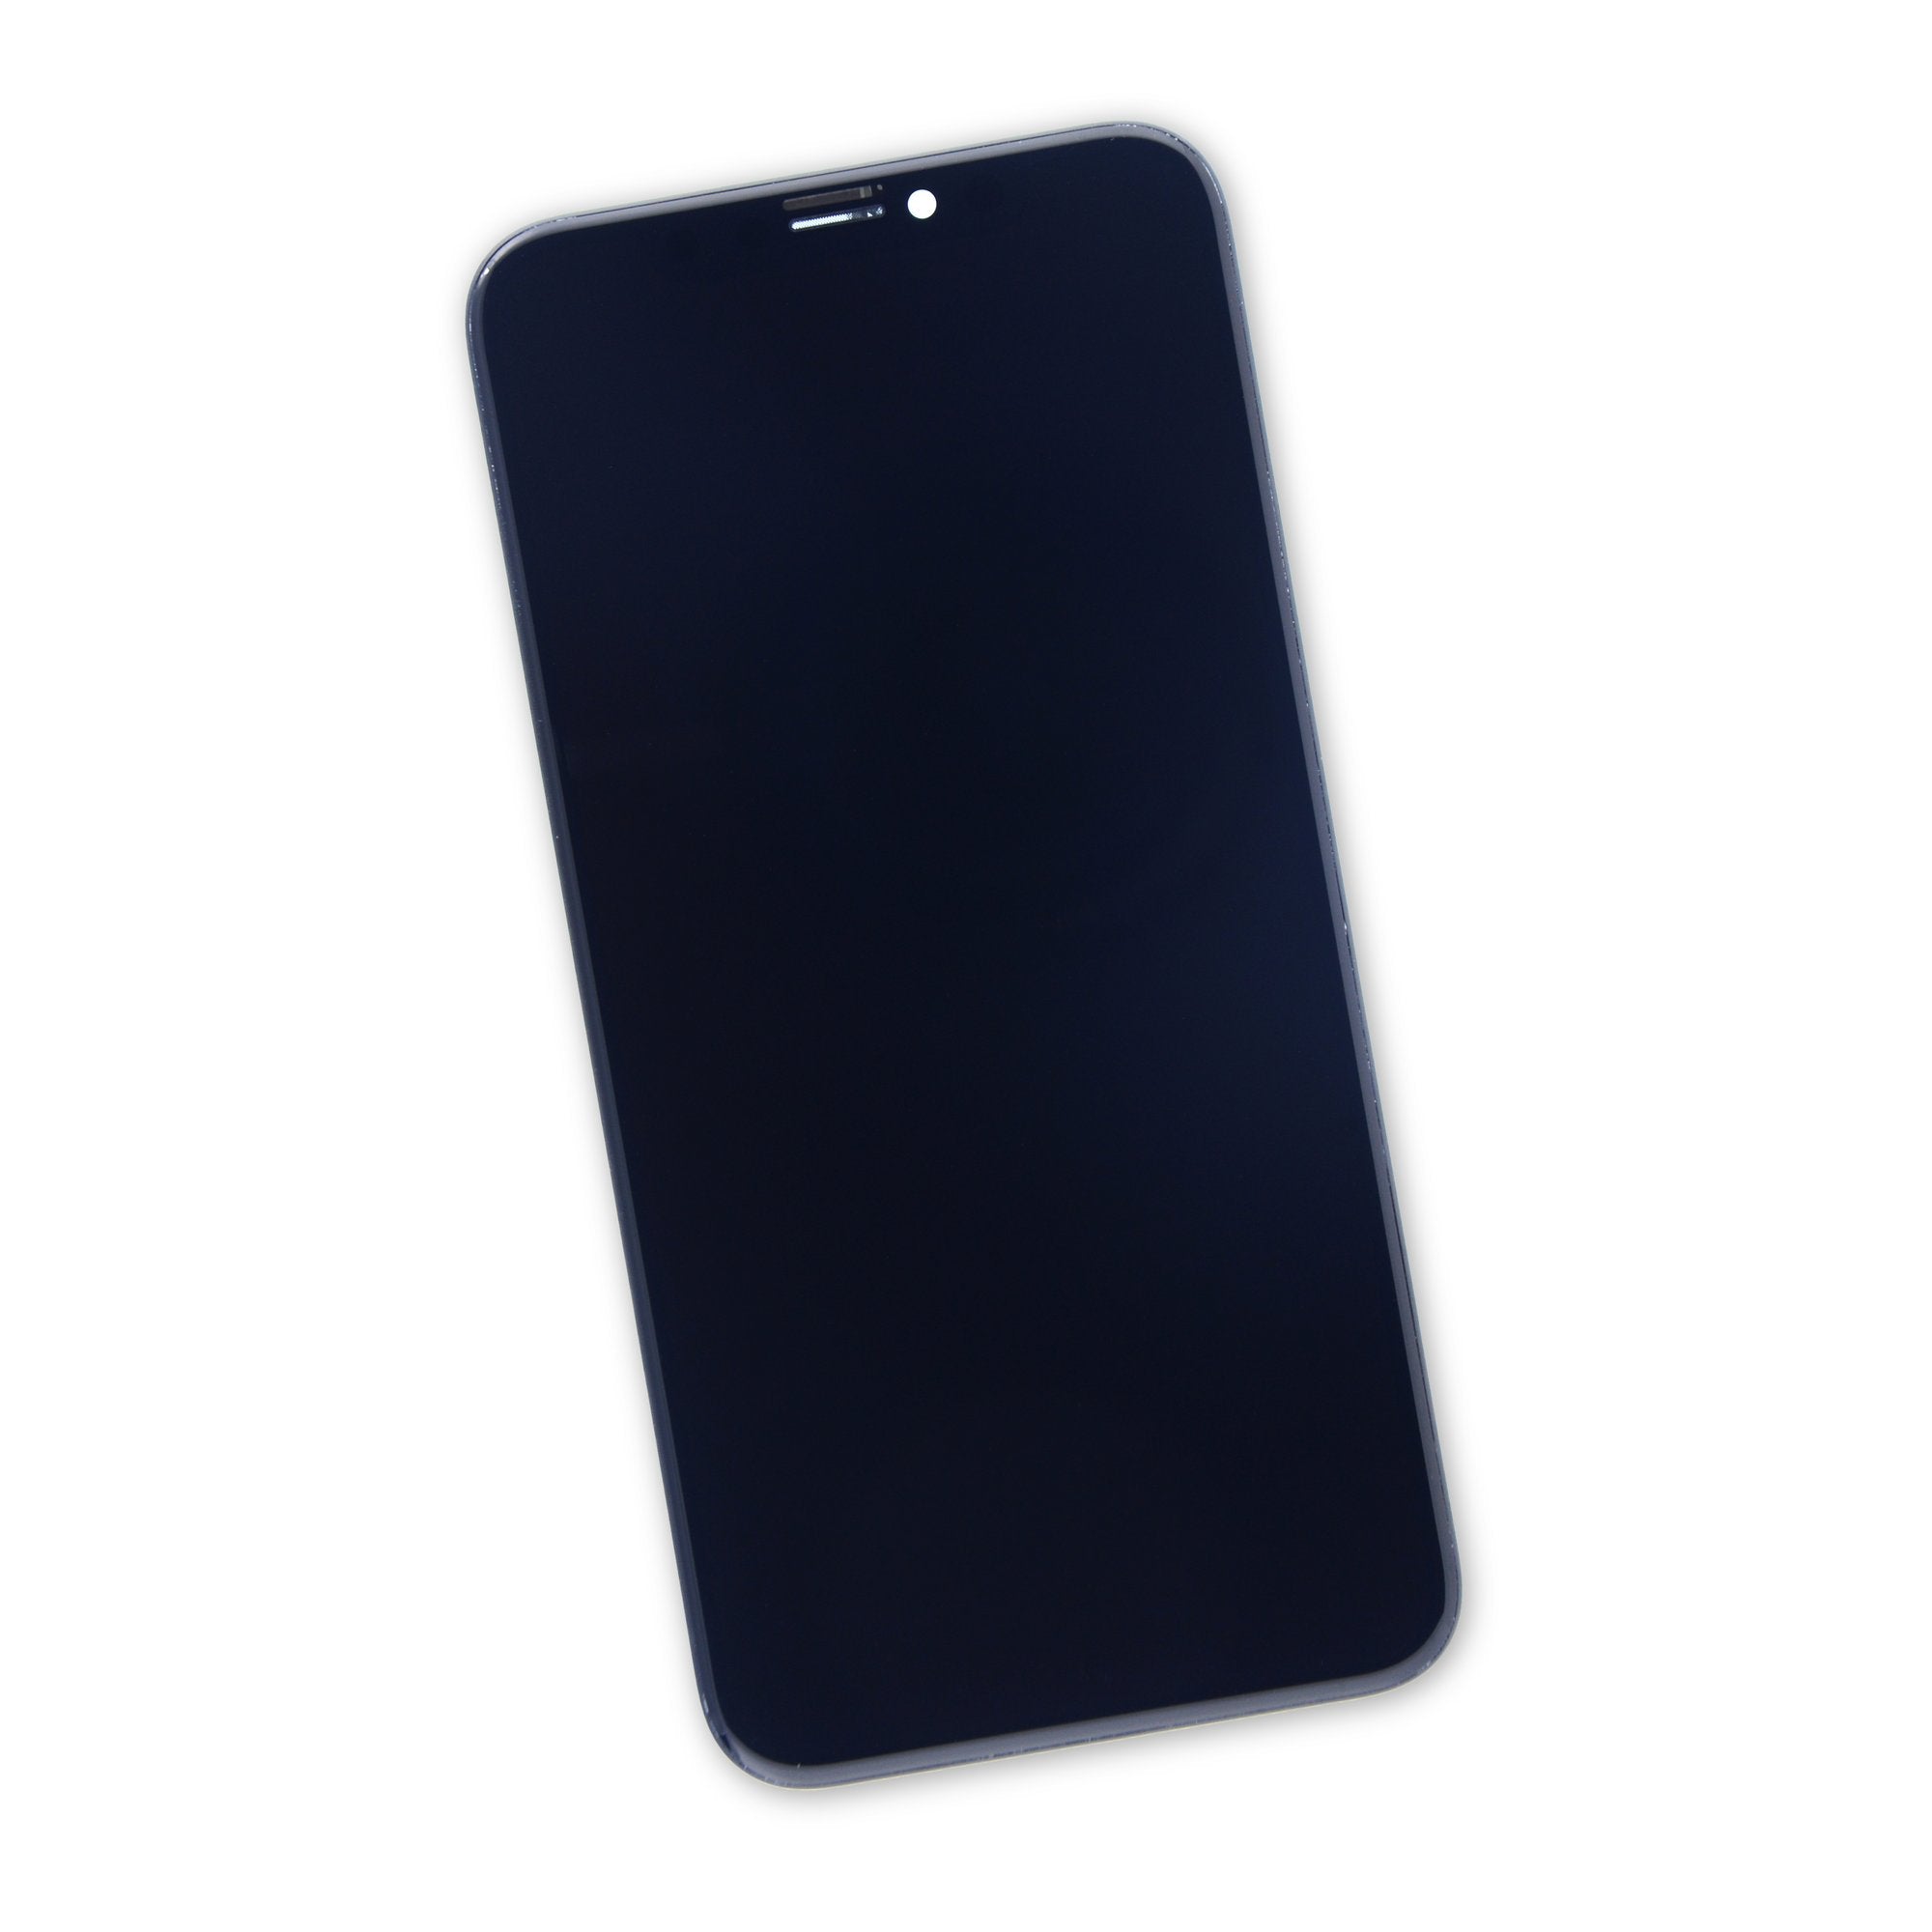 iPhone X Screen - Original OLED